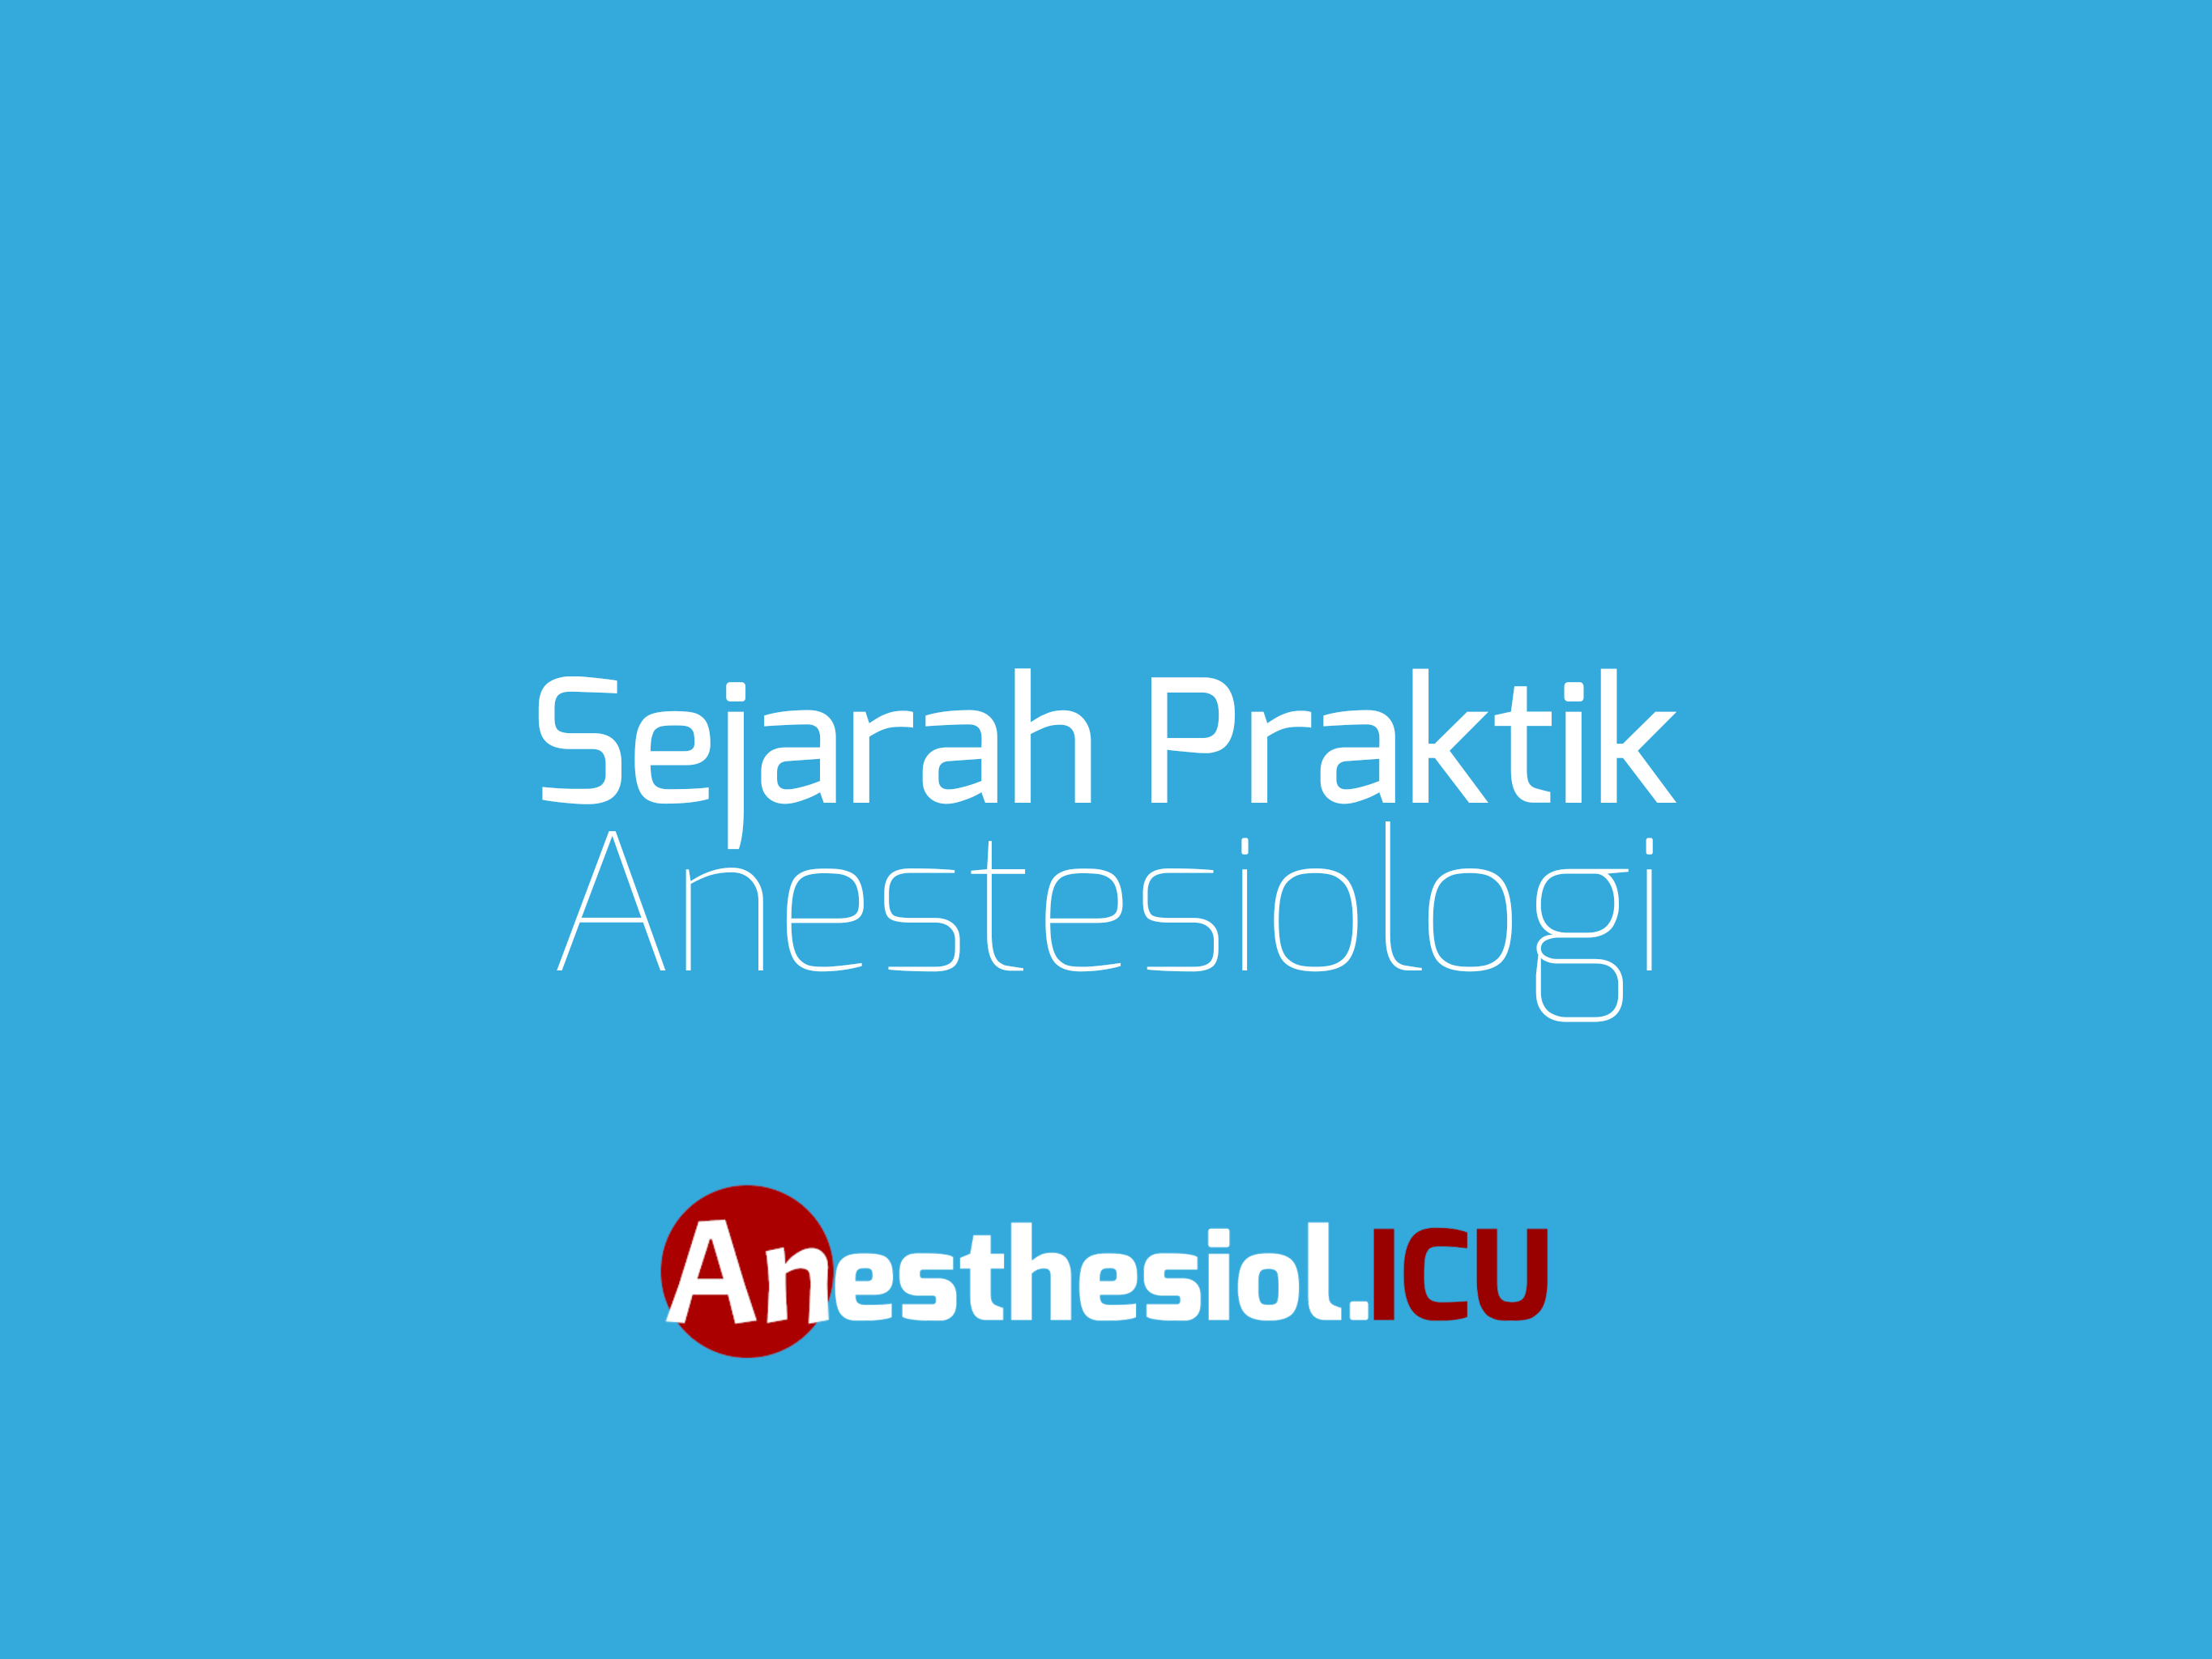 Sejarah Praktik Anestesiologi